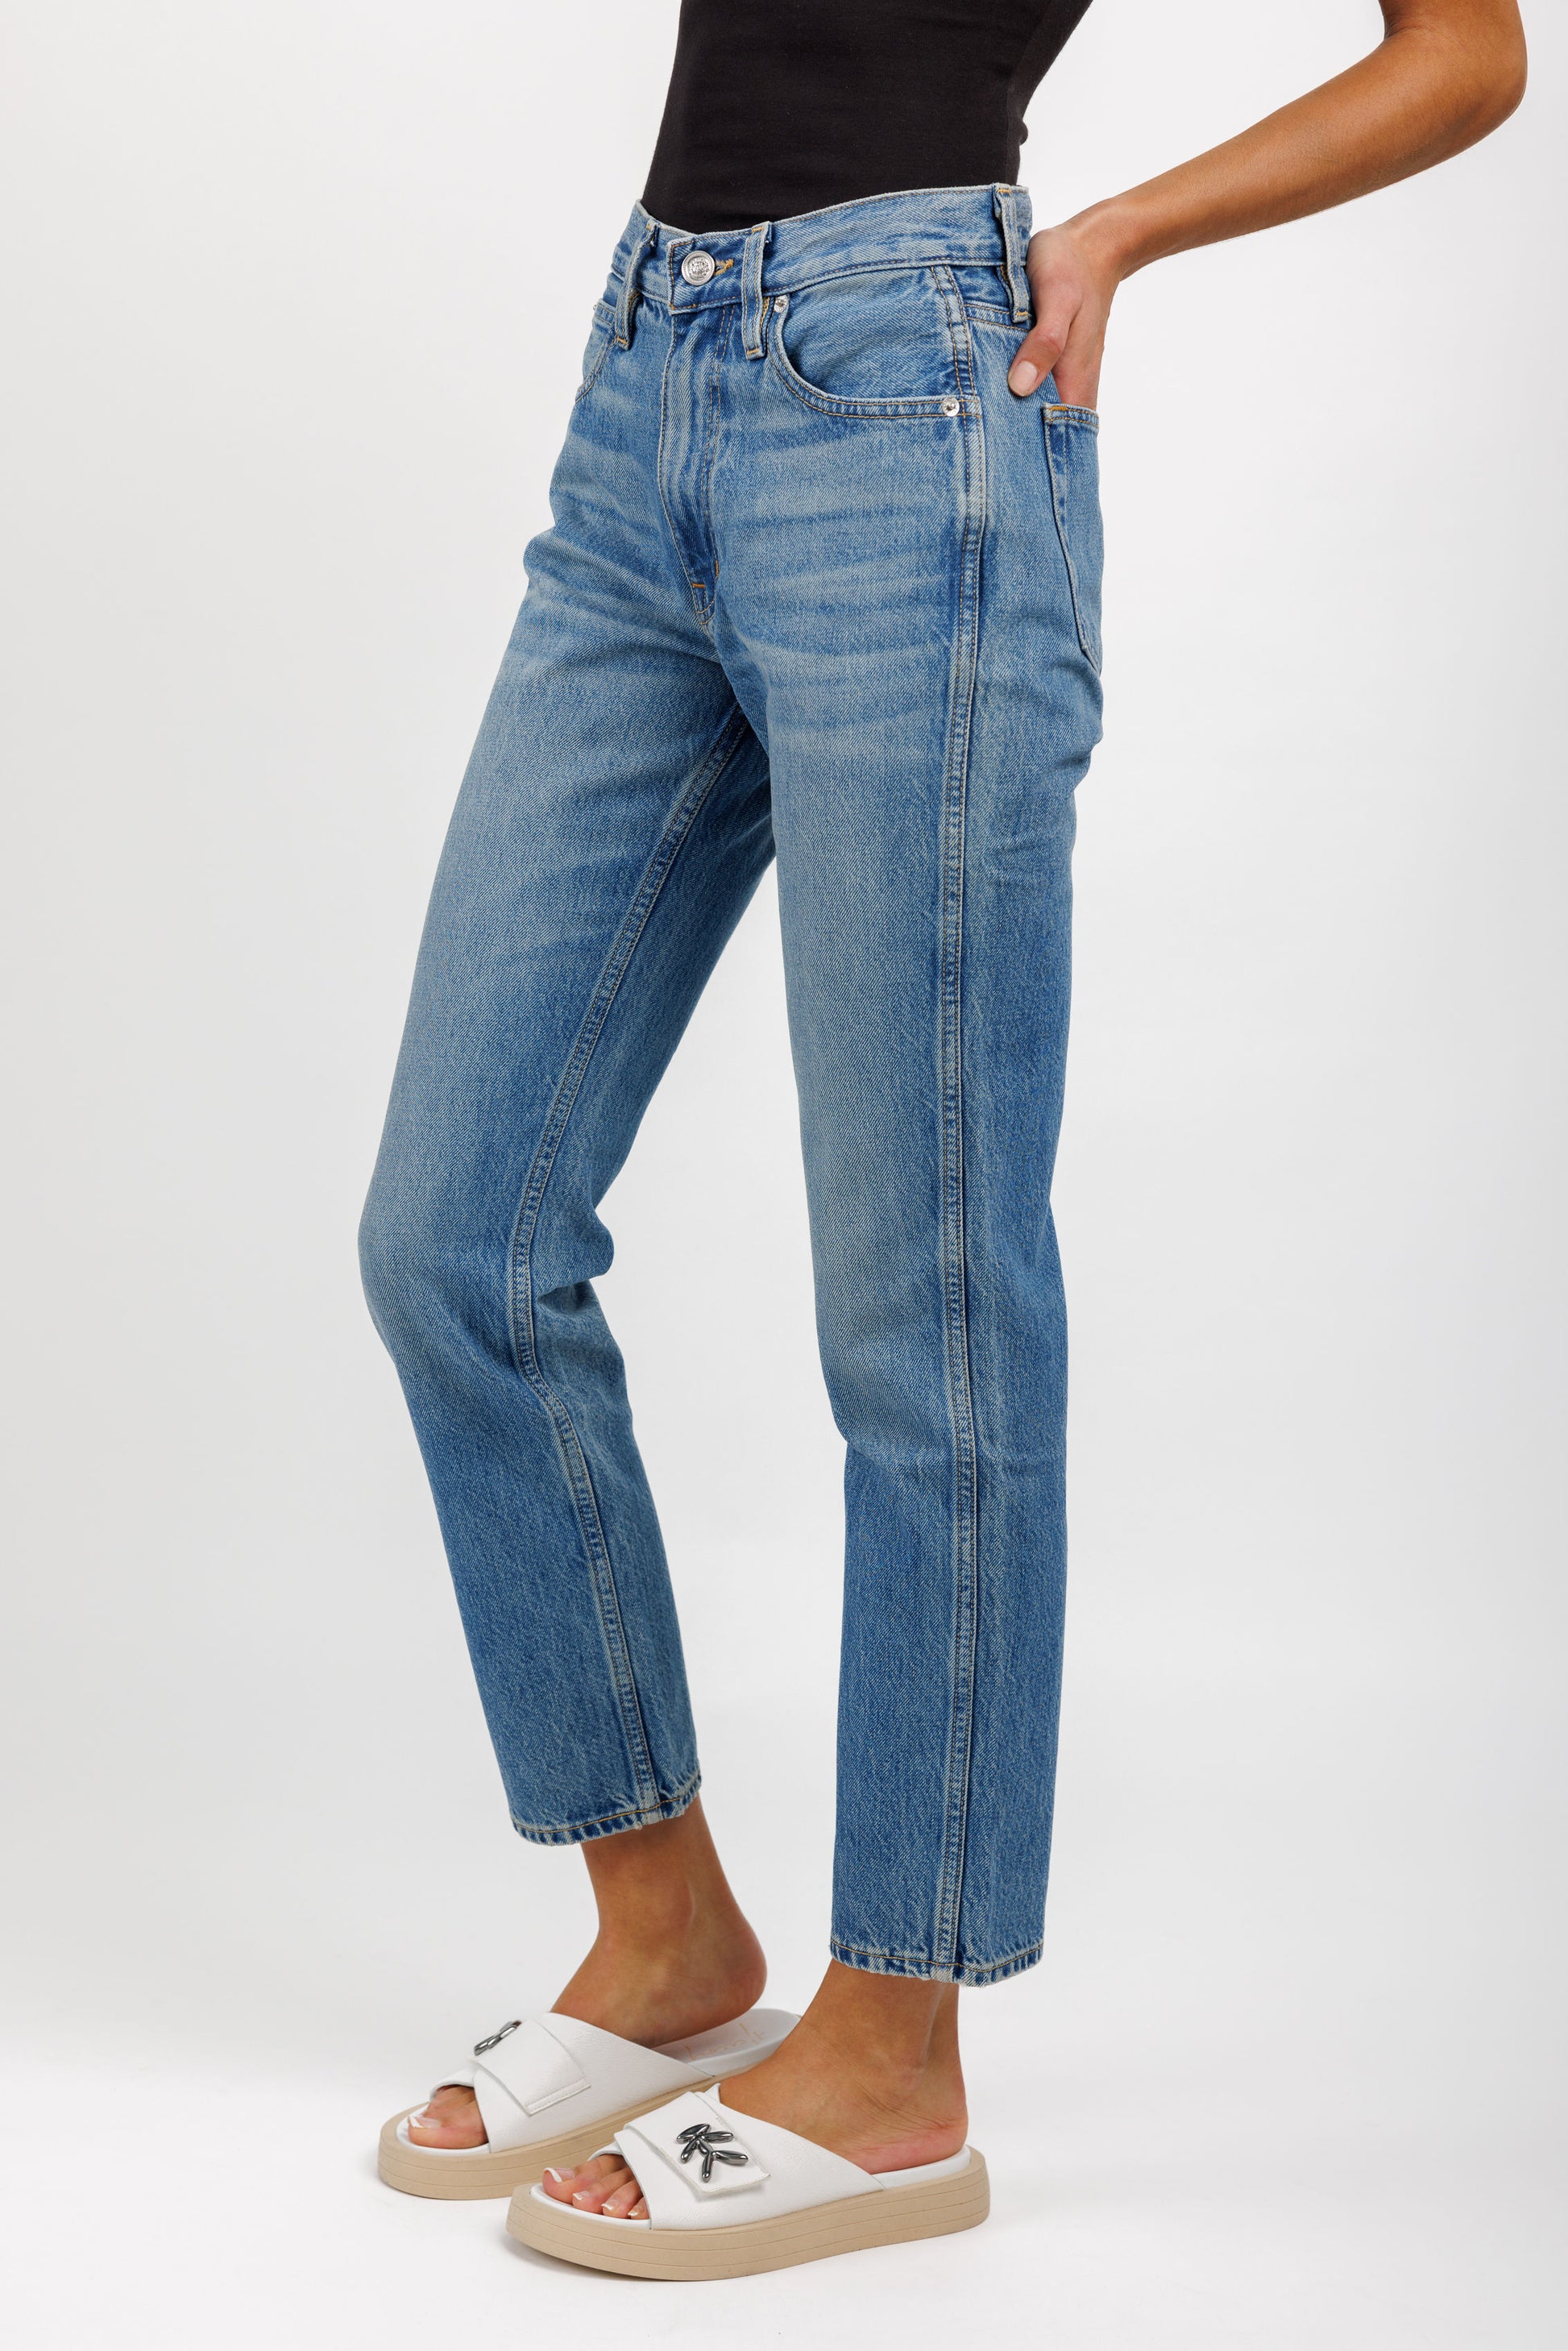 SLVRLAKE Virginia Slim Jeans in Pay No Mind